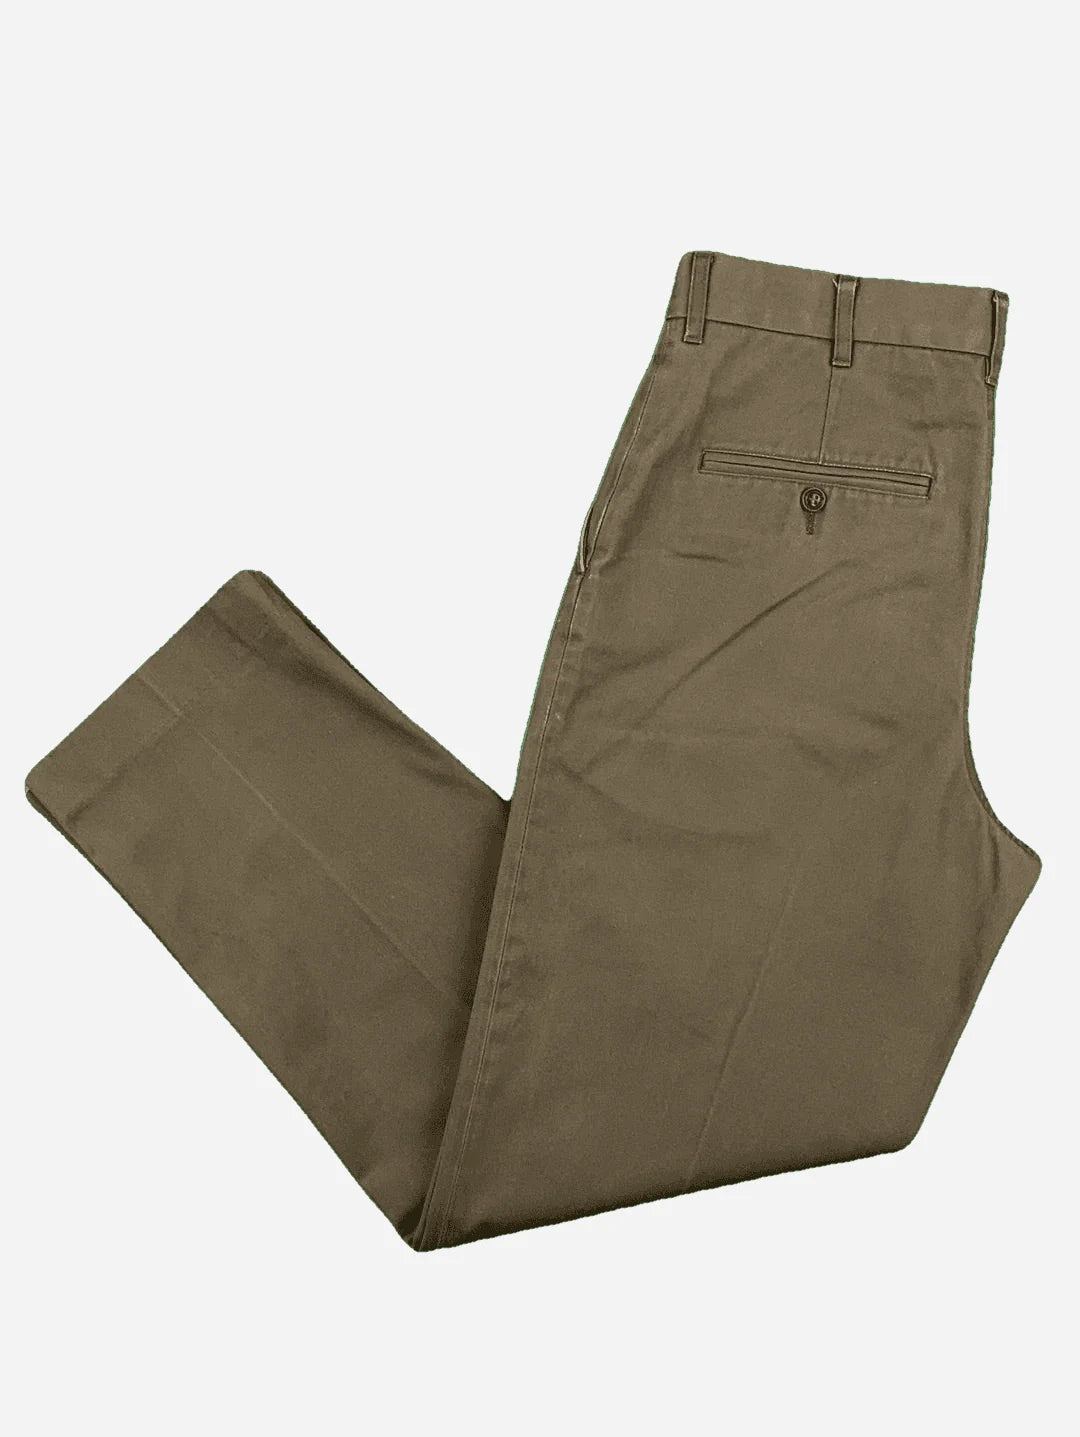 UPS Work Pants 33/31 (L)